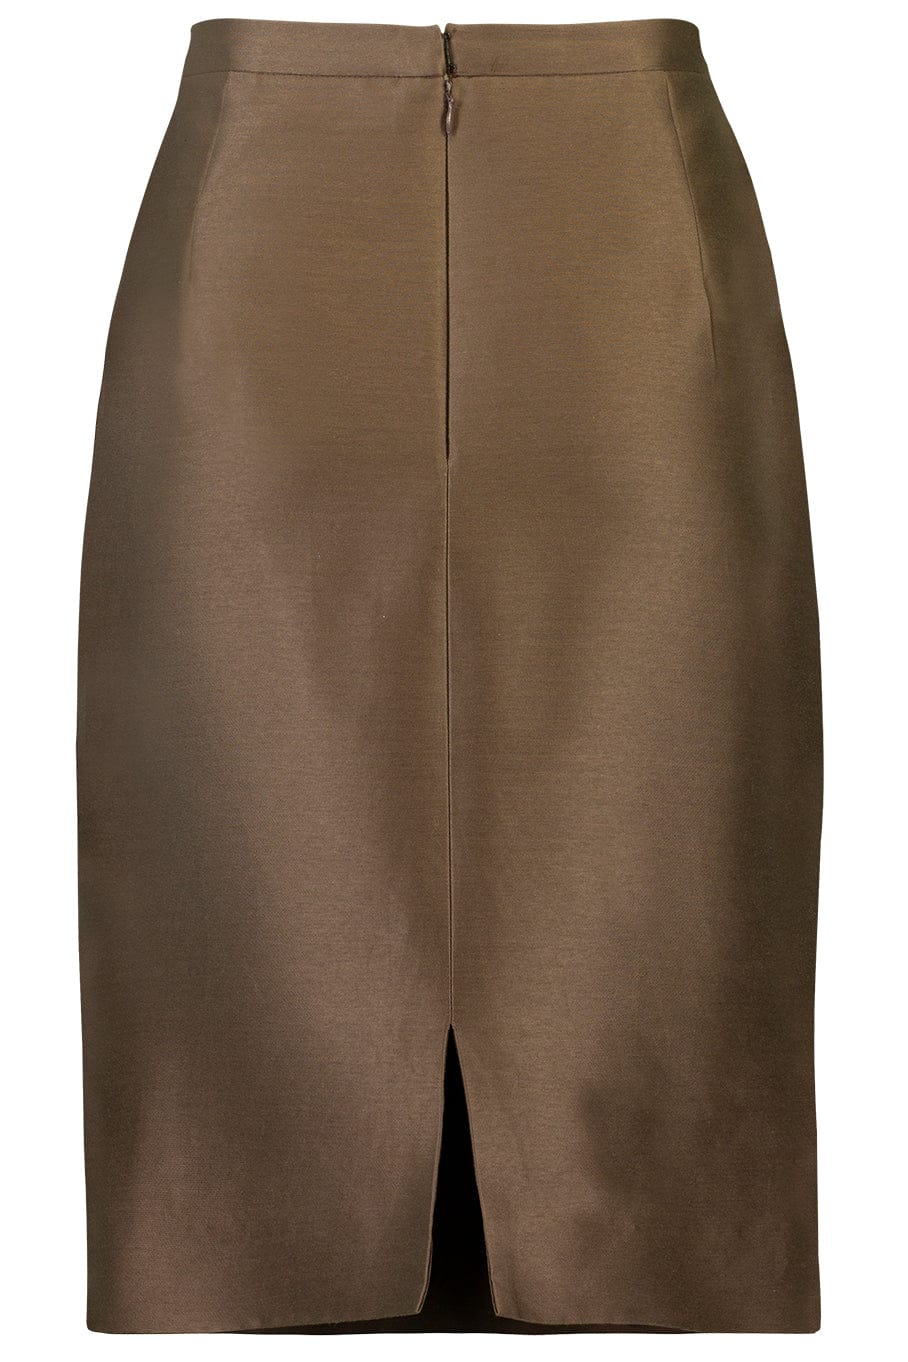 OSCAR DE LA RENTA-Knee Length Skirt-BROWN